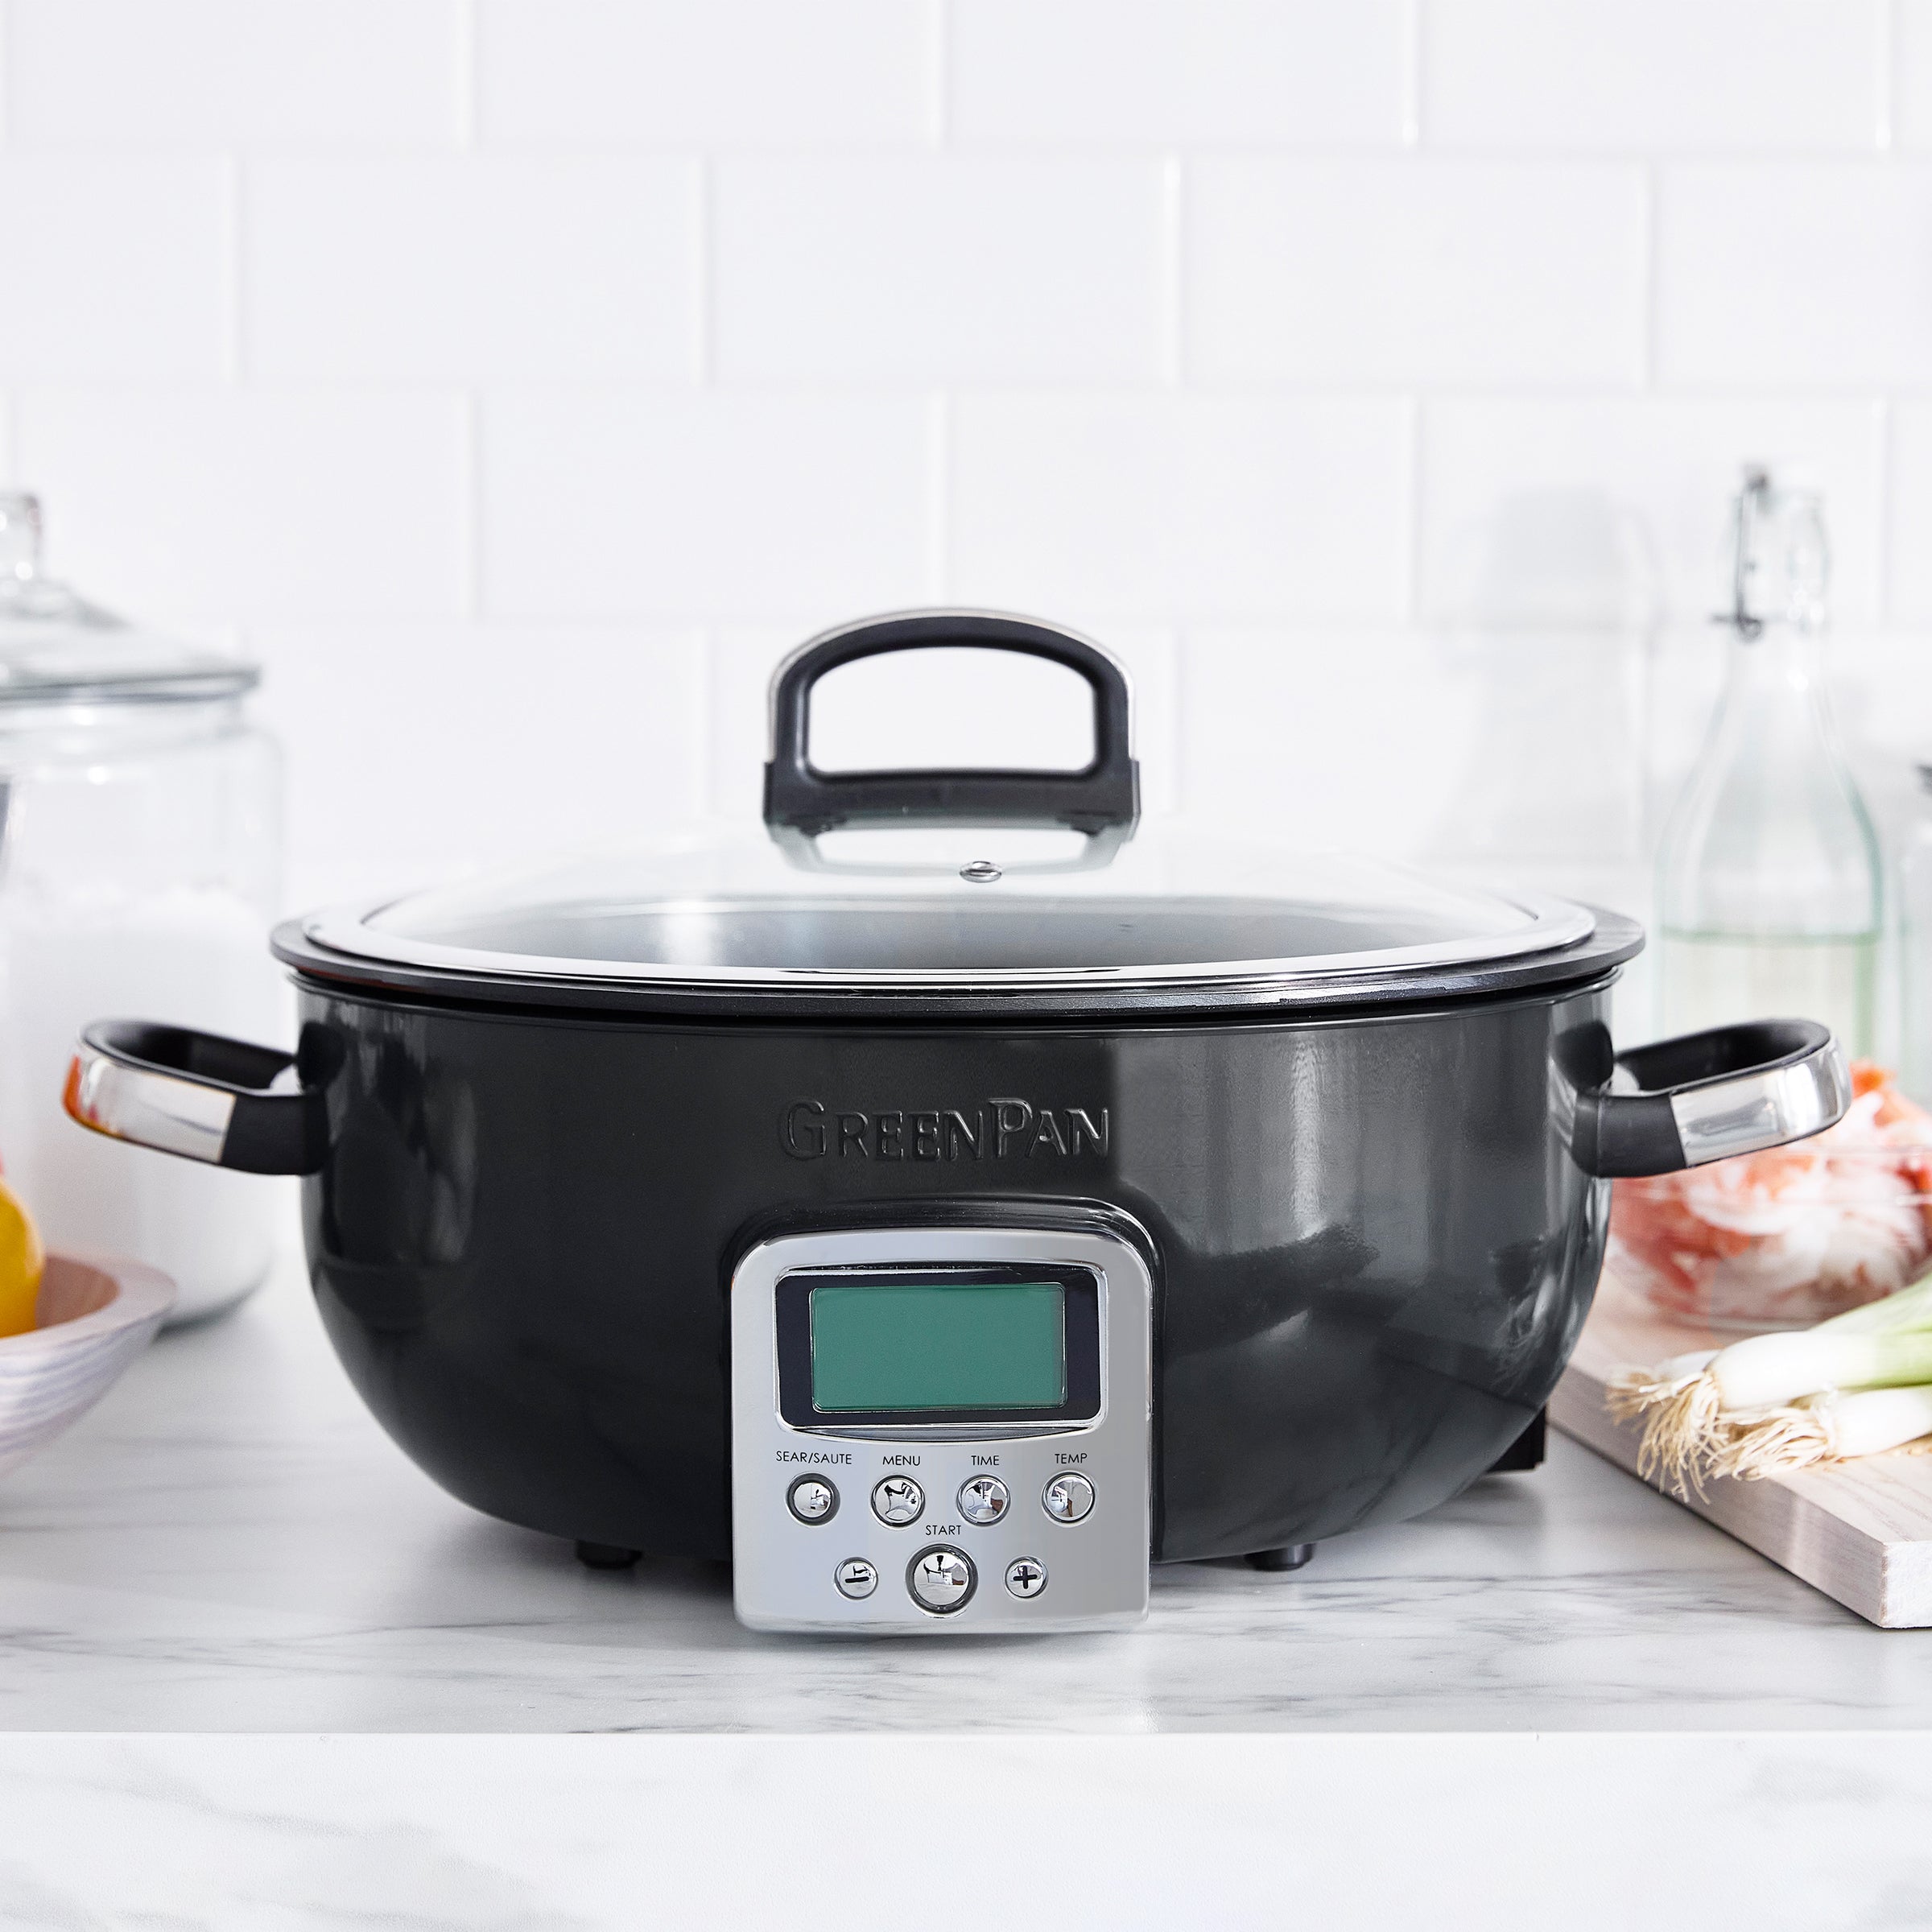 Omni cooker Black 5.6L